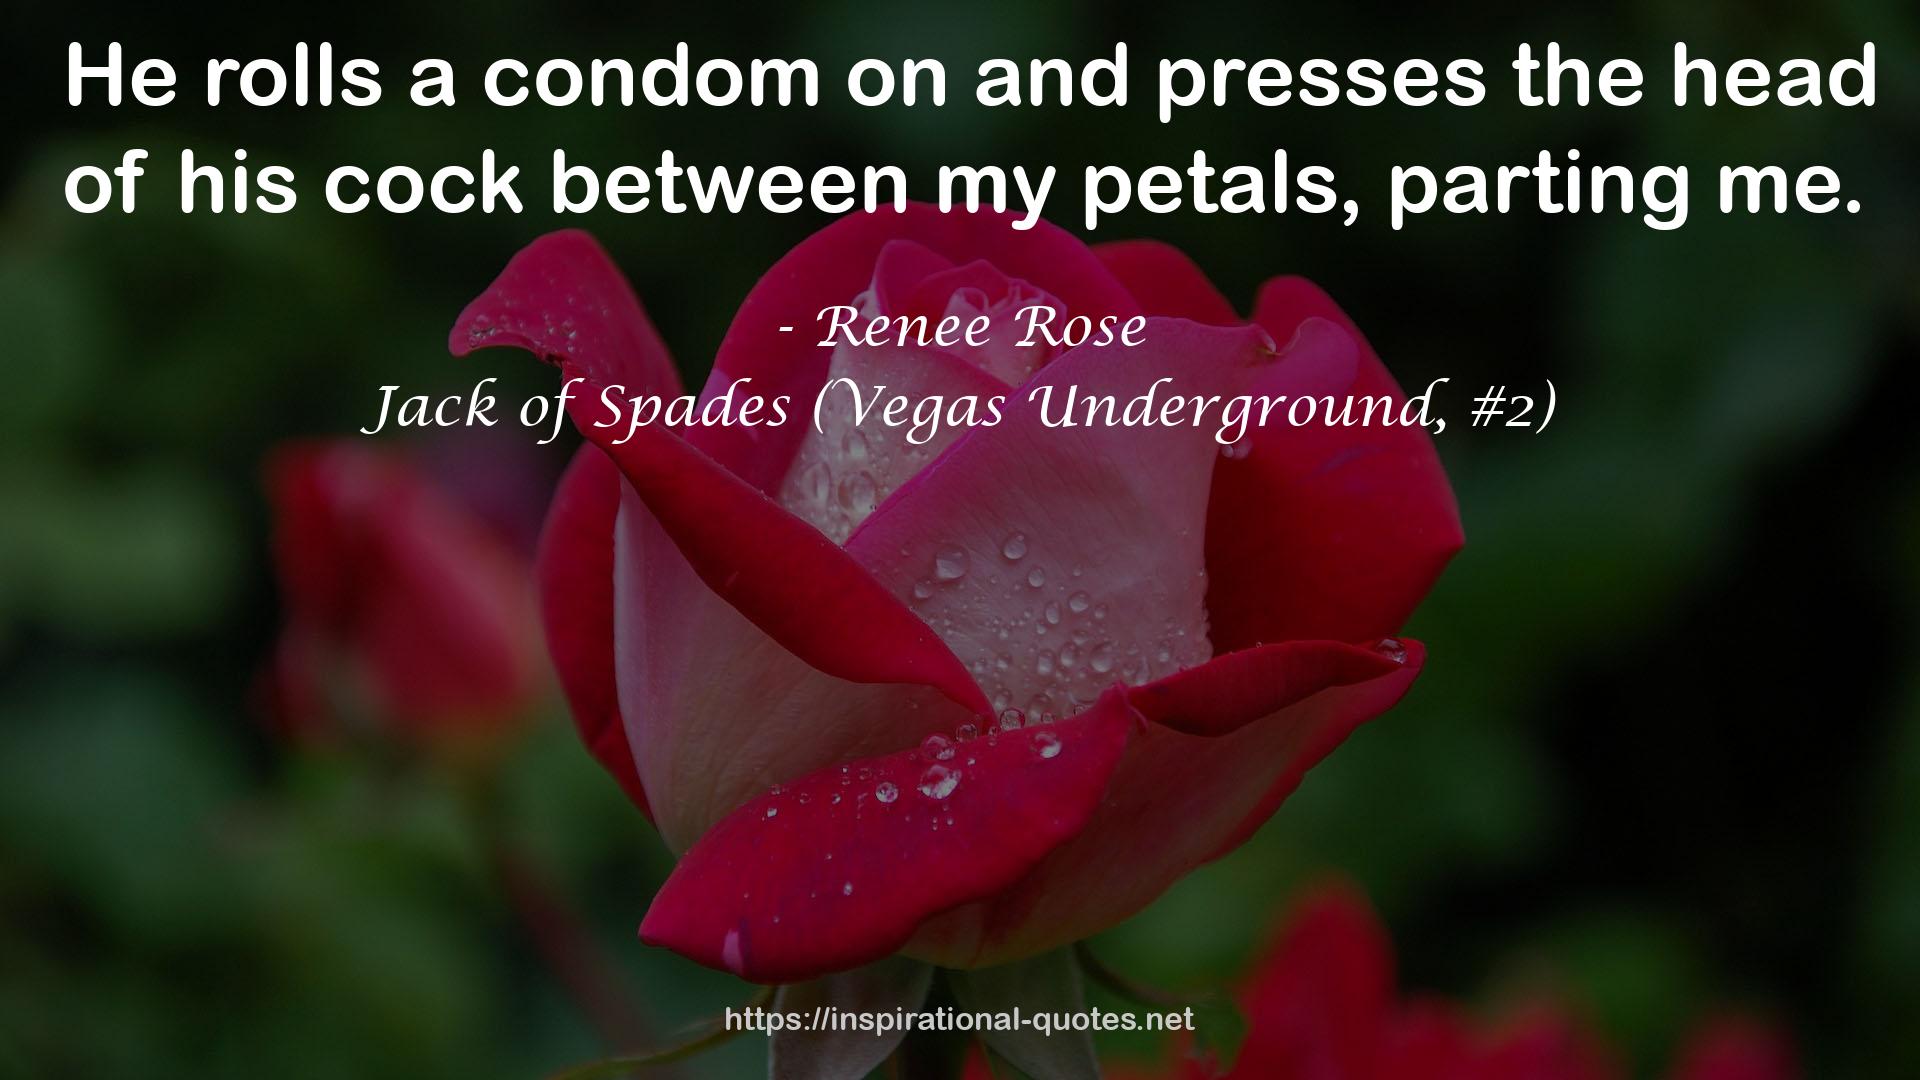 Jack of Spades (Vegas Underground, #2) QUOTES